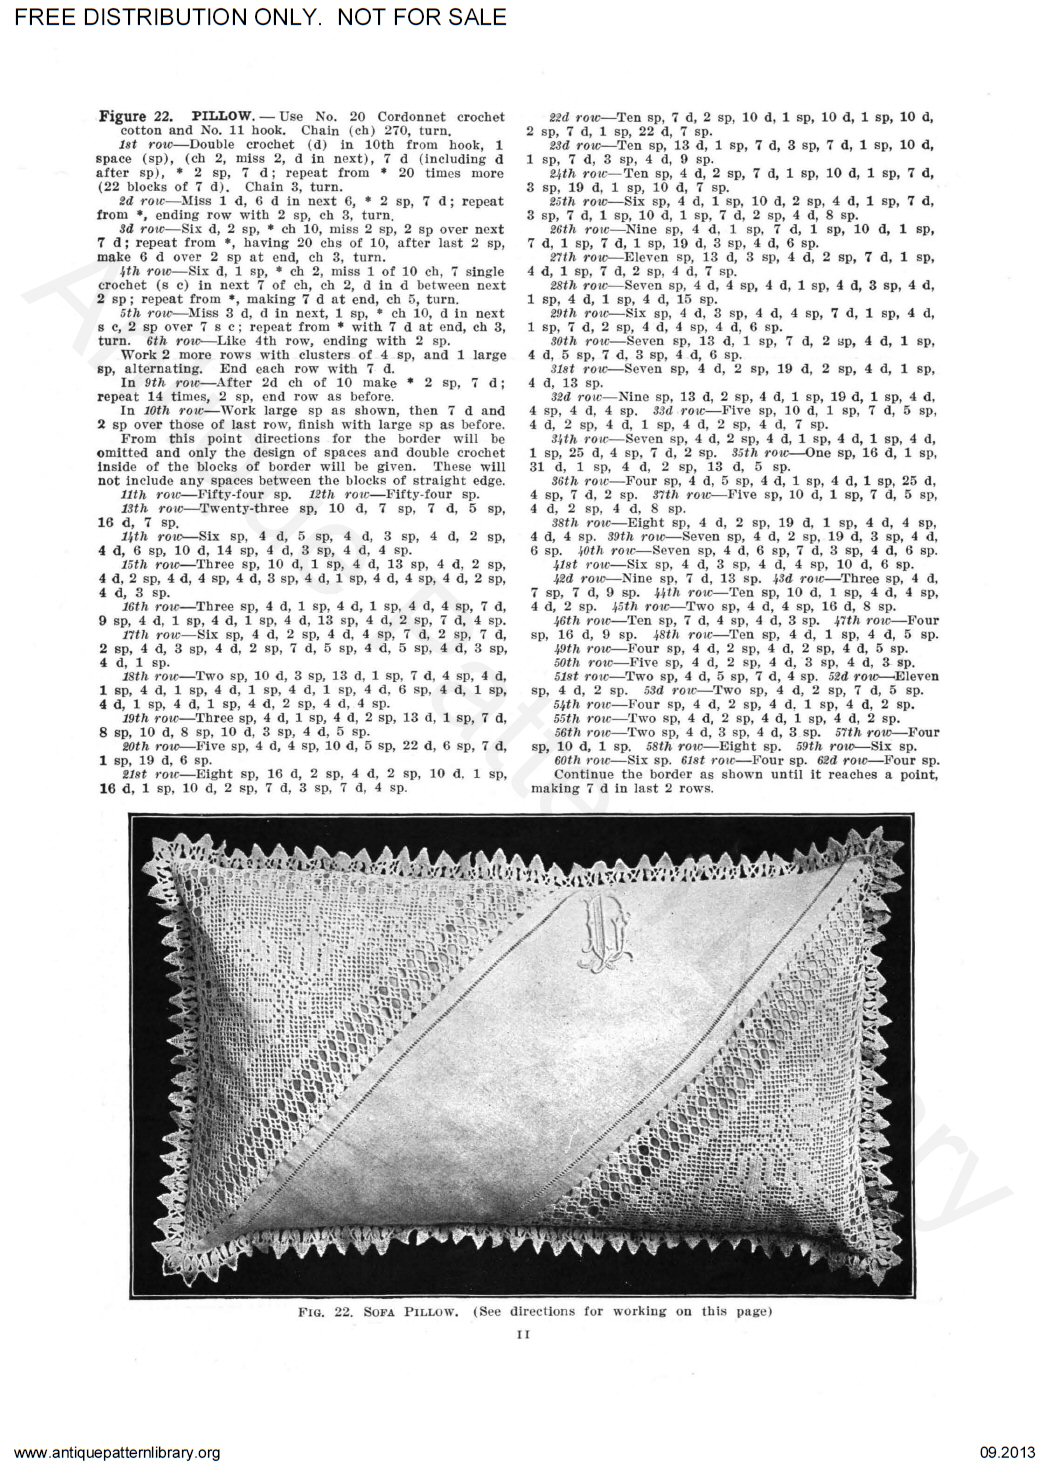 6-JA018 The Priscilla Filet Crochet Book No. 2